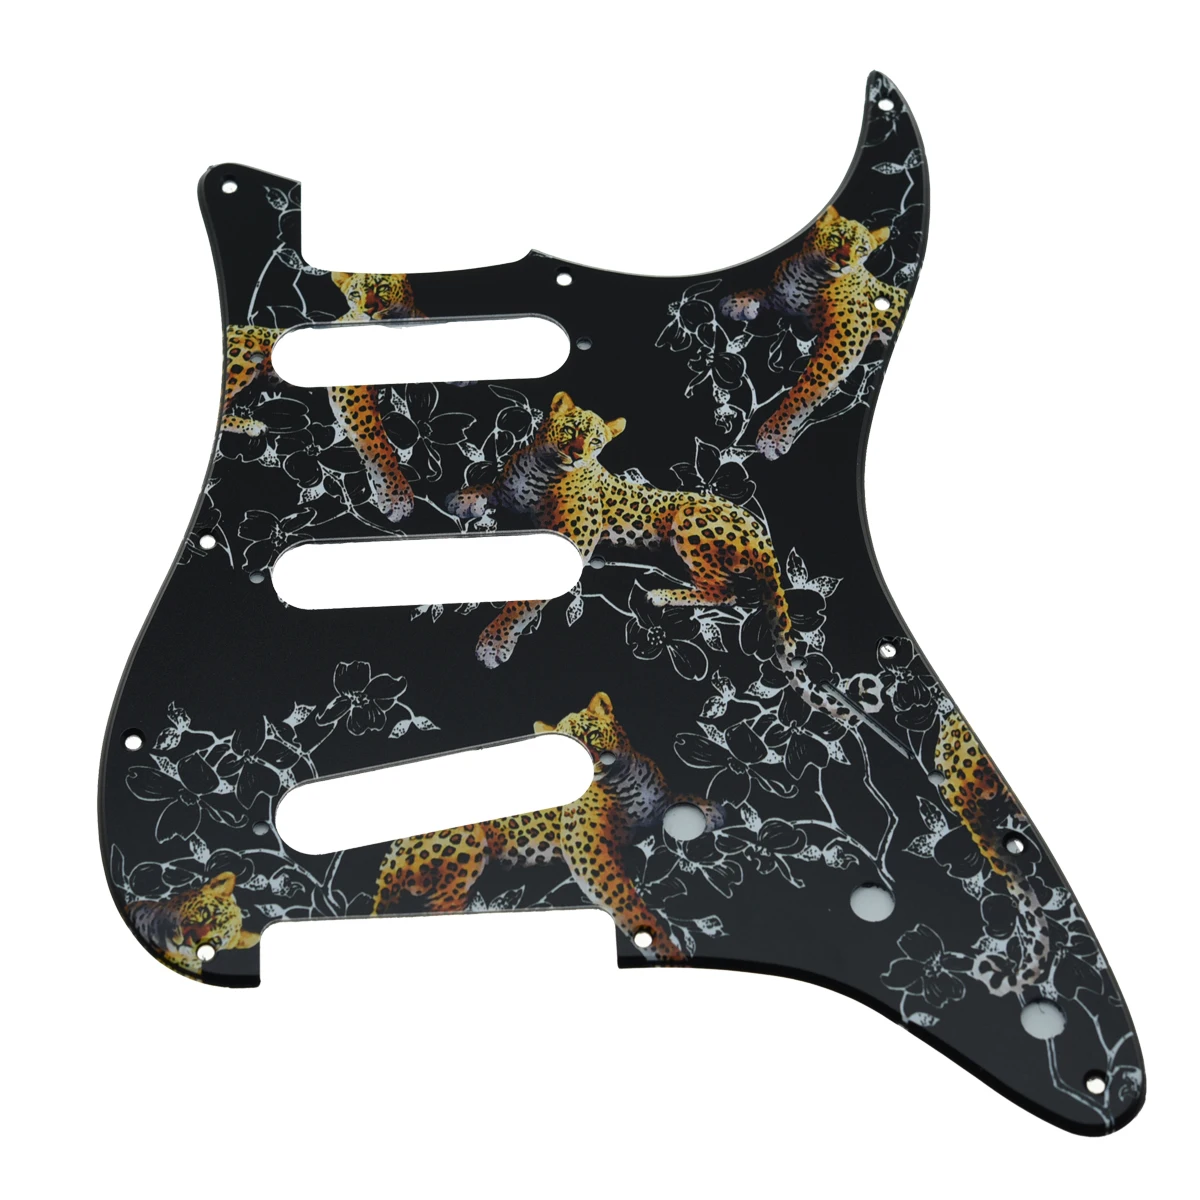 

11 Hole 3D Printed Plastic ST/Strat Guitar Pickguard Scratch Plate Reverse Bridge Fits for Stratocaster Jimi/Hendrix